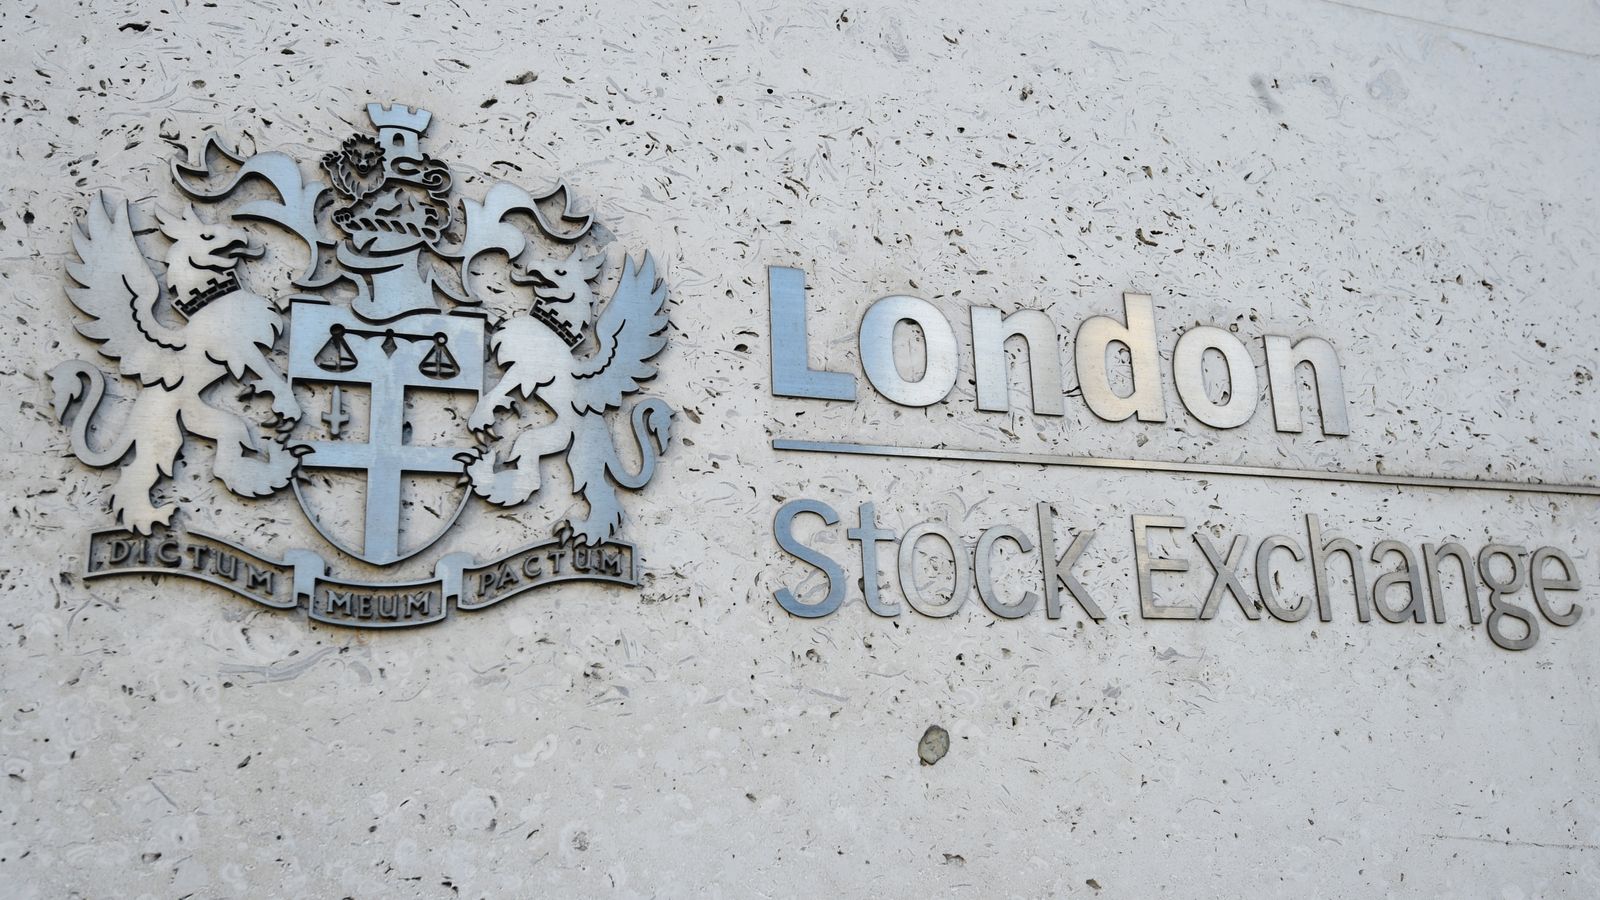 Ukraine invasion: London Stock Exchange suspends 28 companies linked to Russia